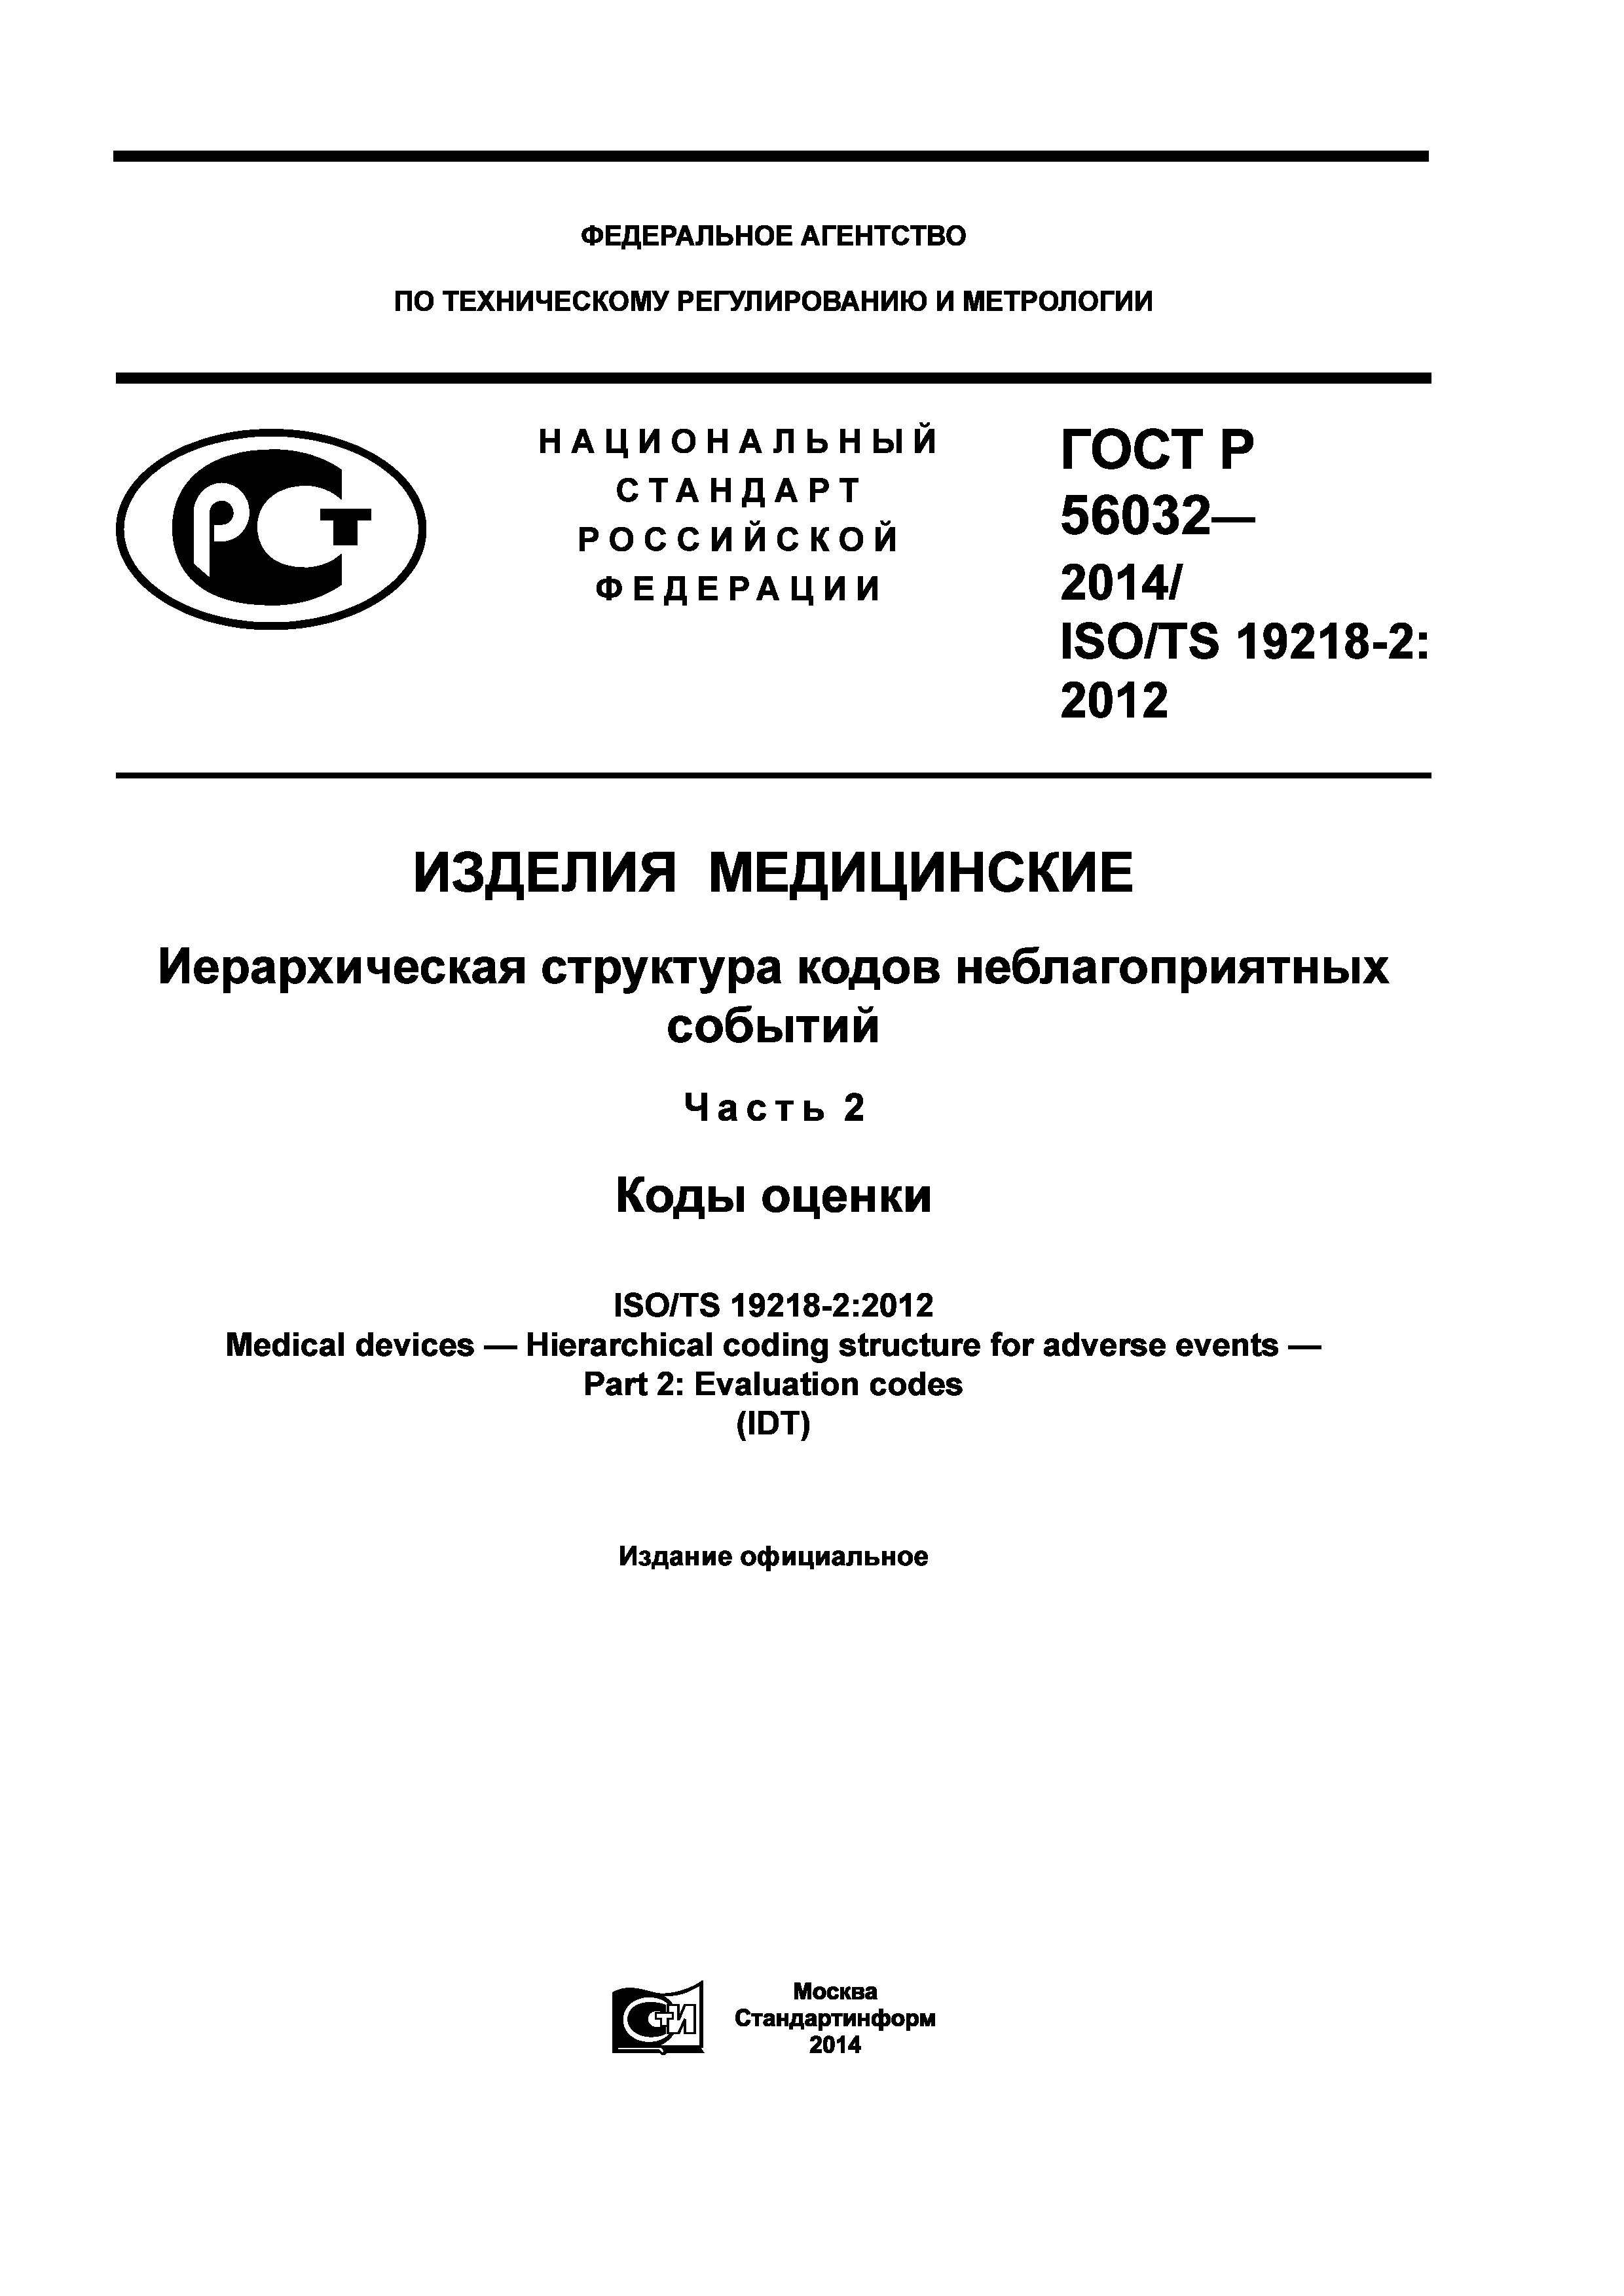 ГОСТ Р 56032-2014